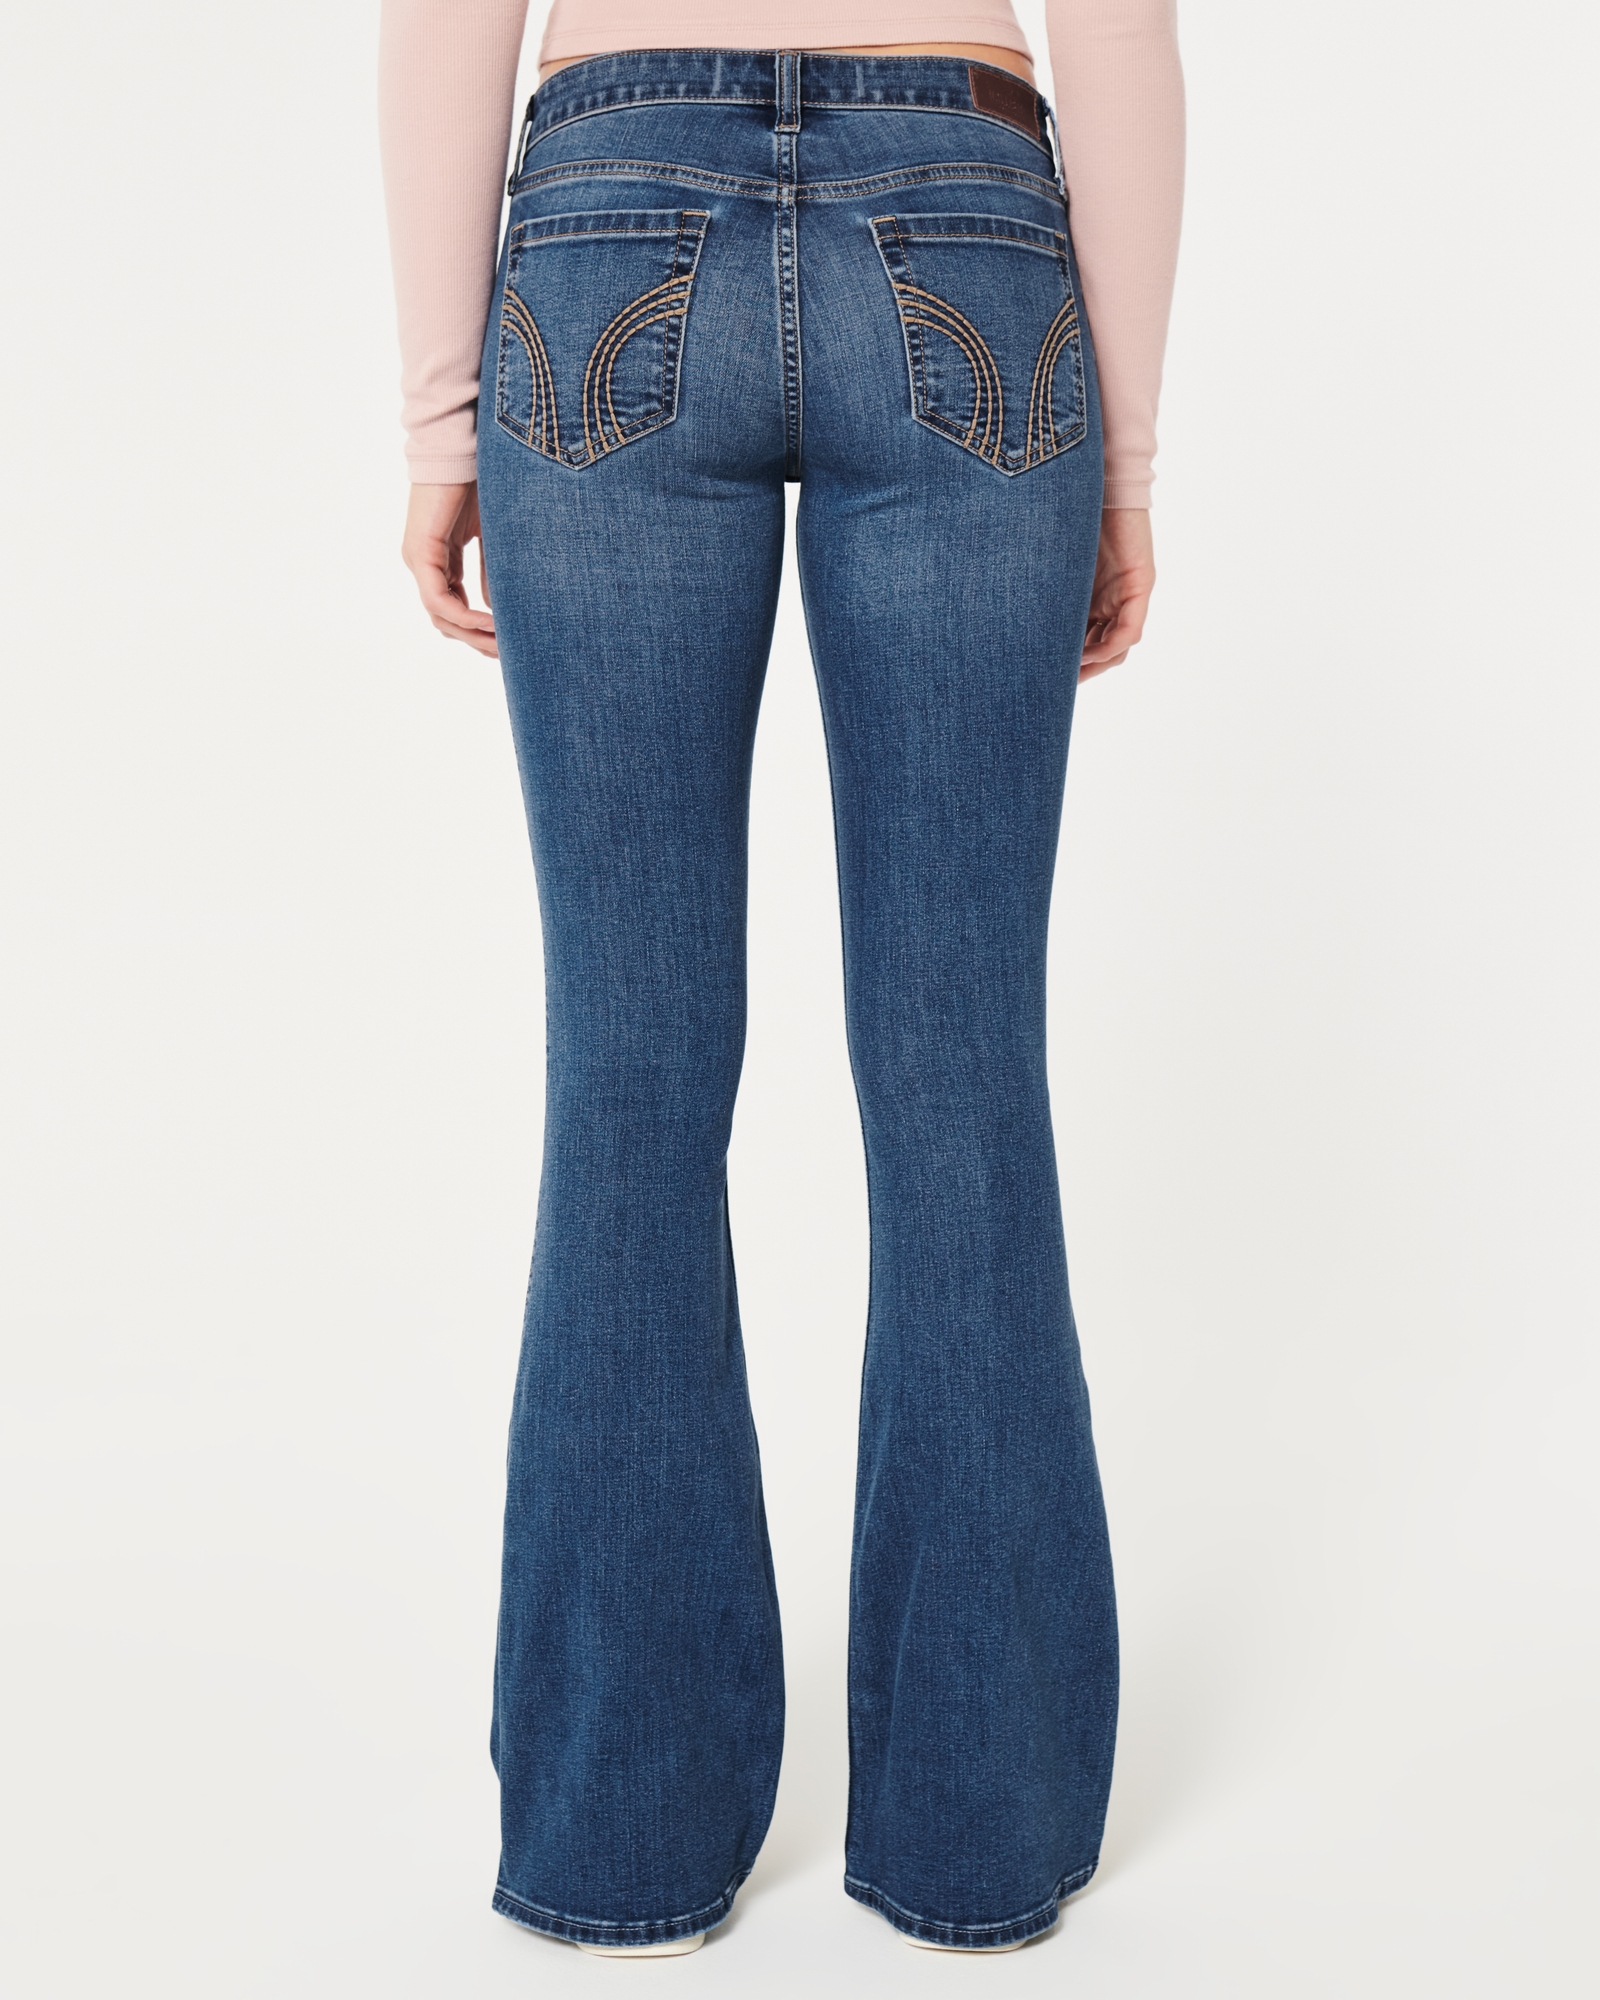 hollister low rise jean leggings. Size 3 short, - Depop